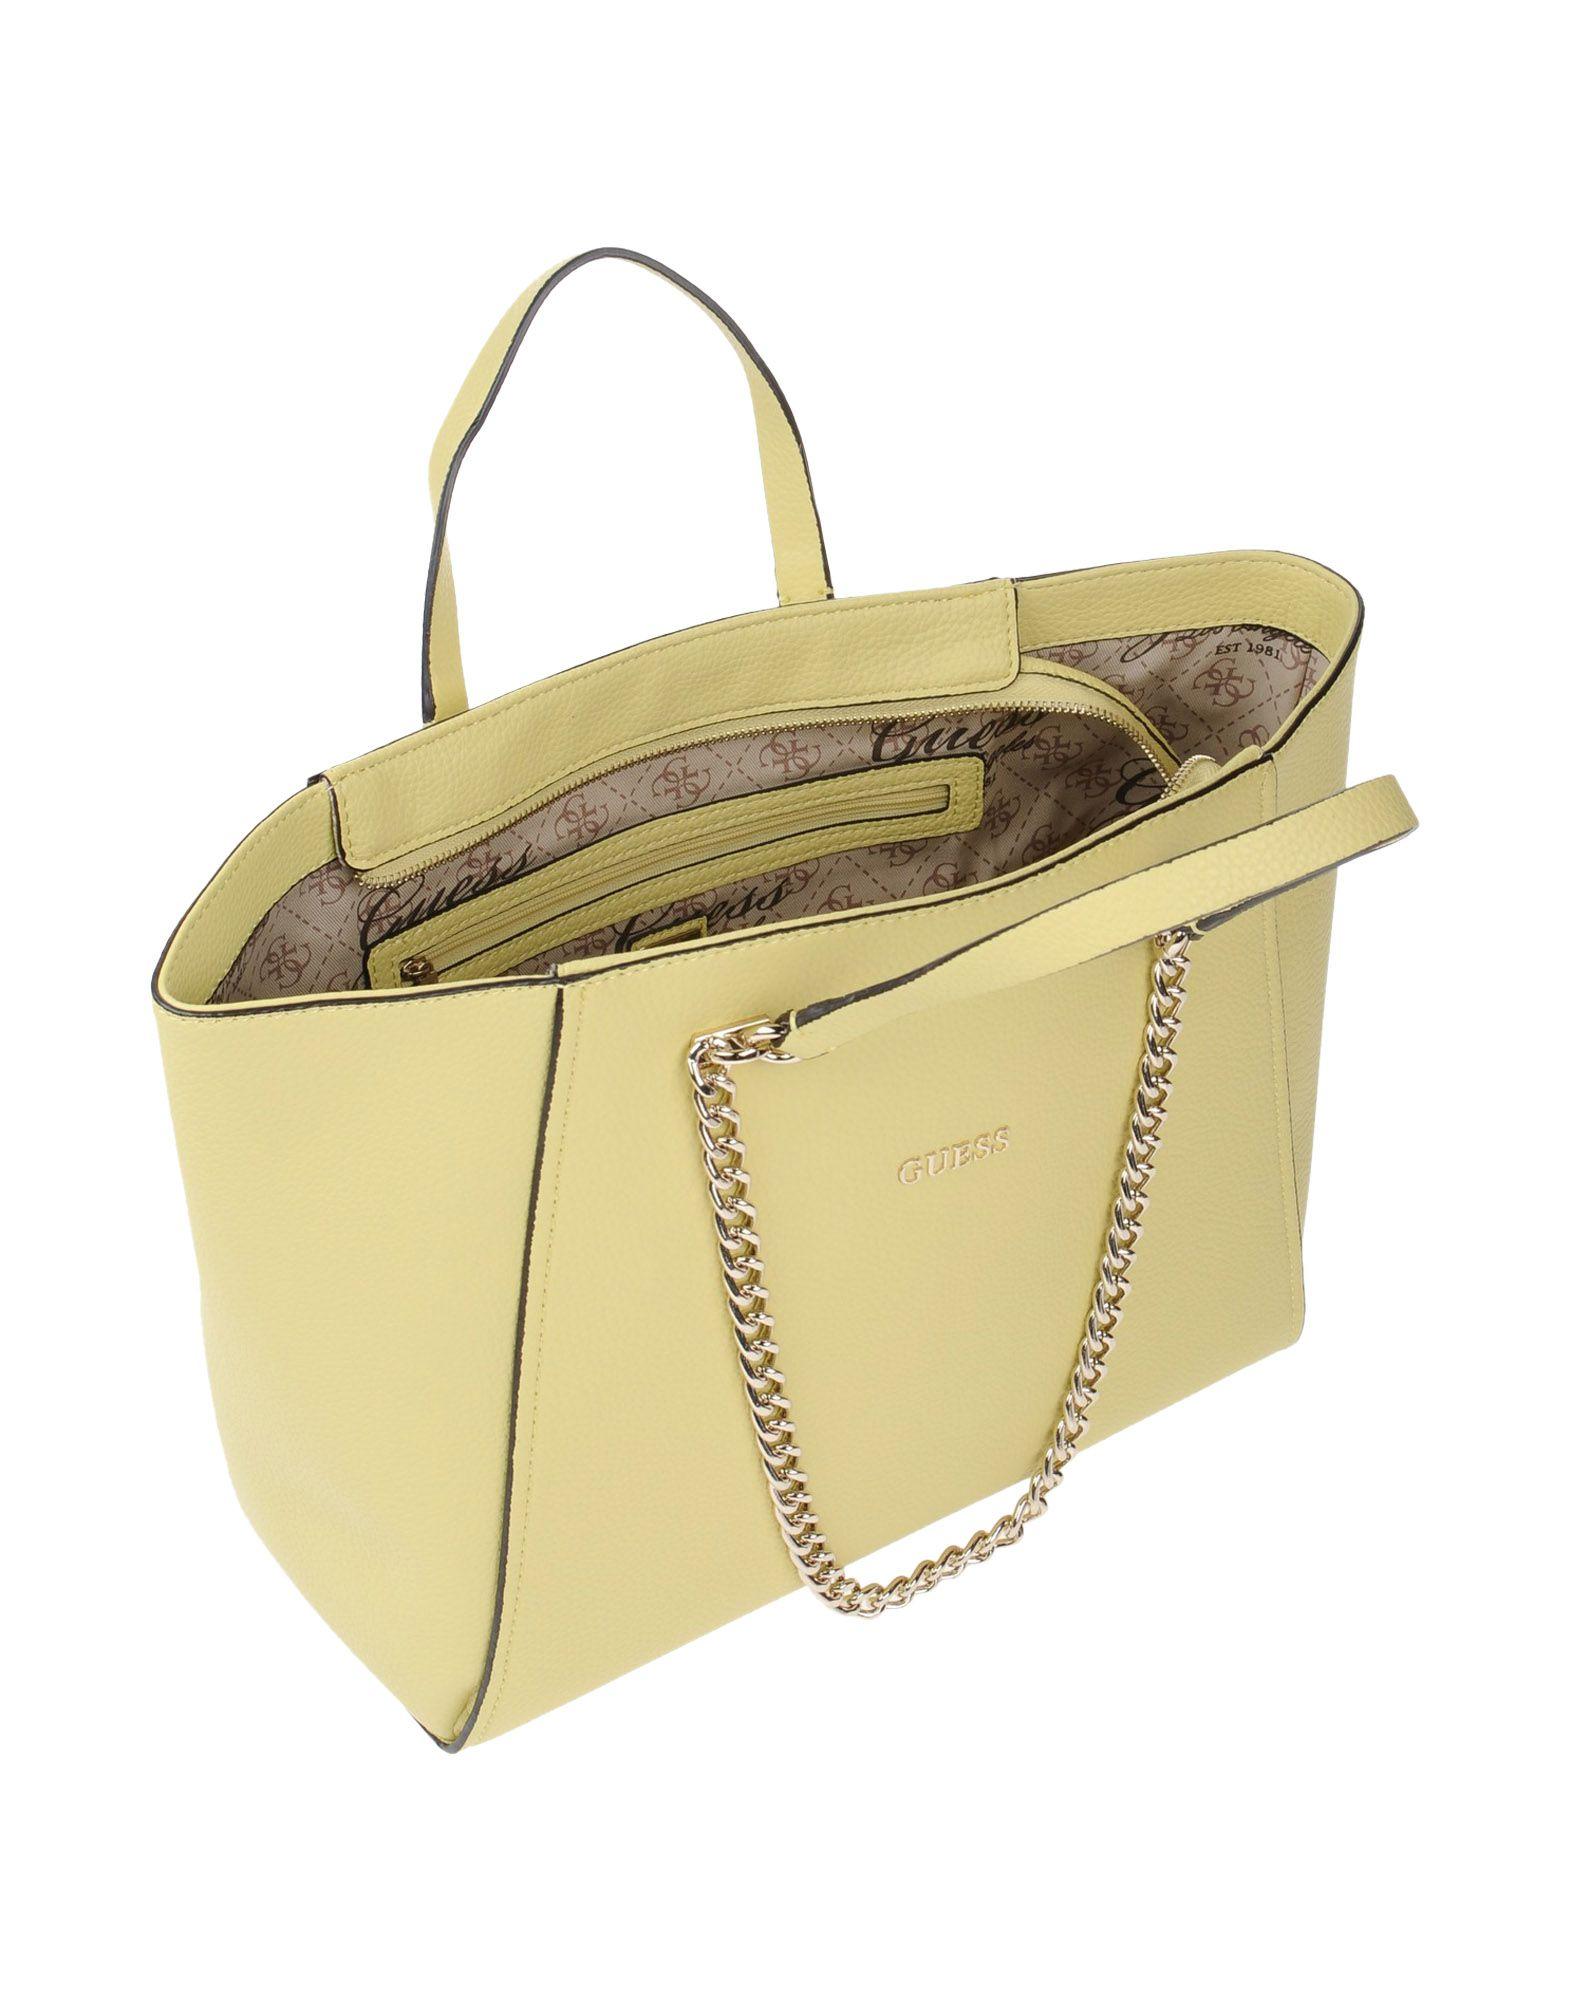 Lyst - Guess Handbag in Yellow